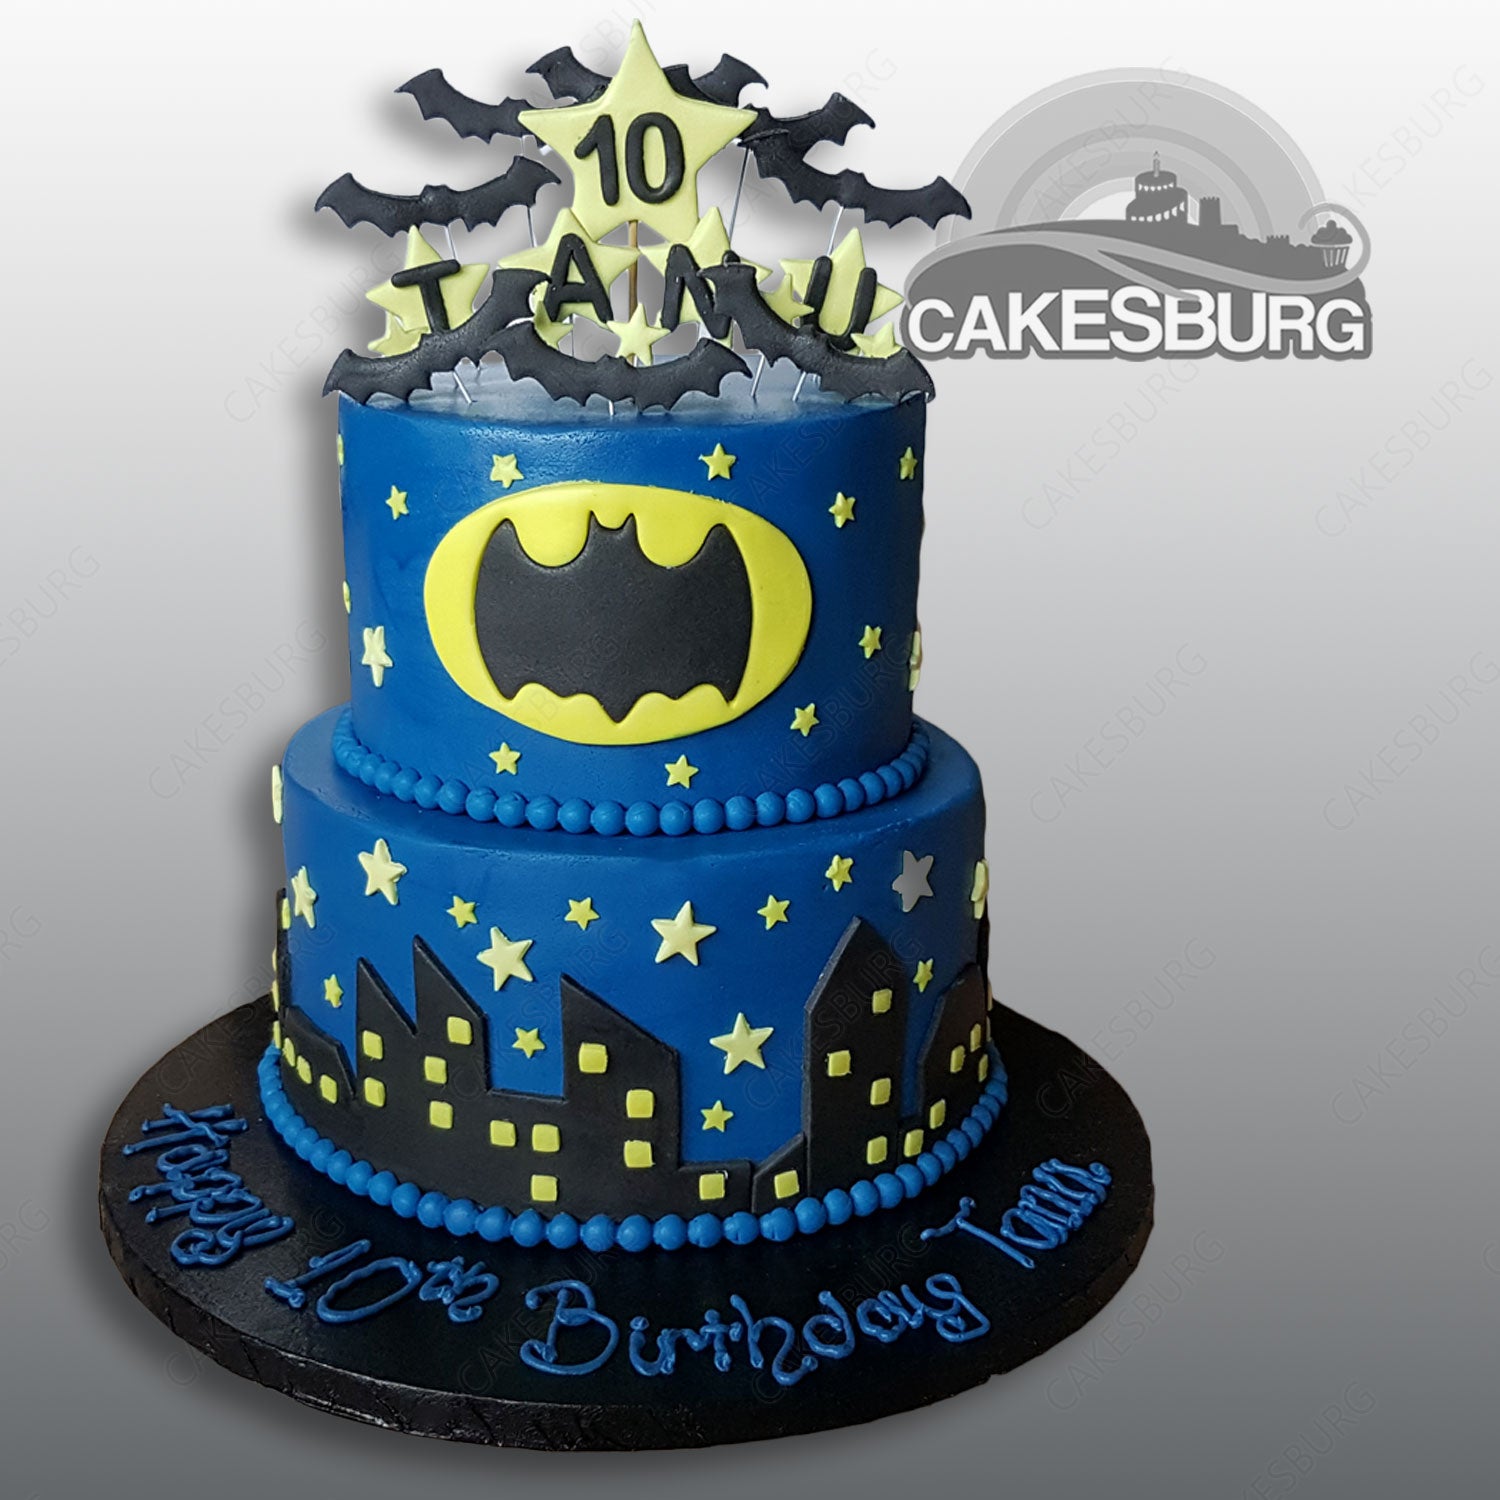 50+ Batman Cake Ideas That Will Score Top Points